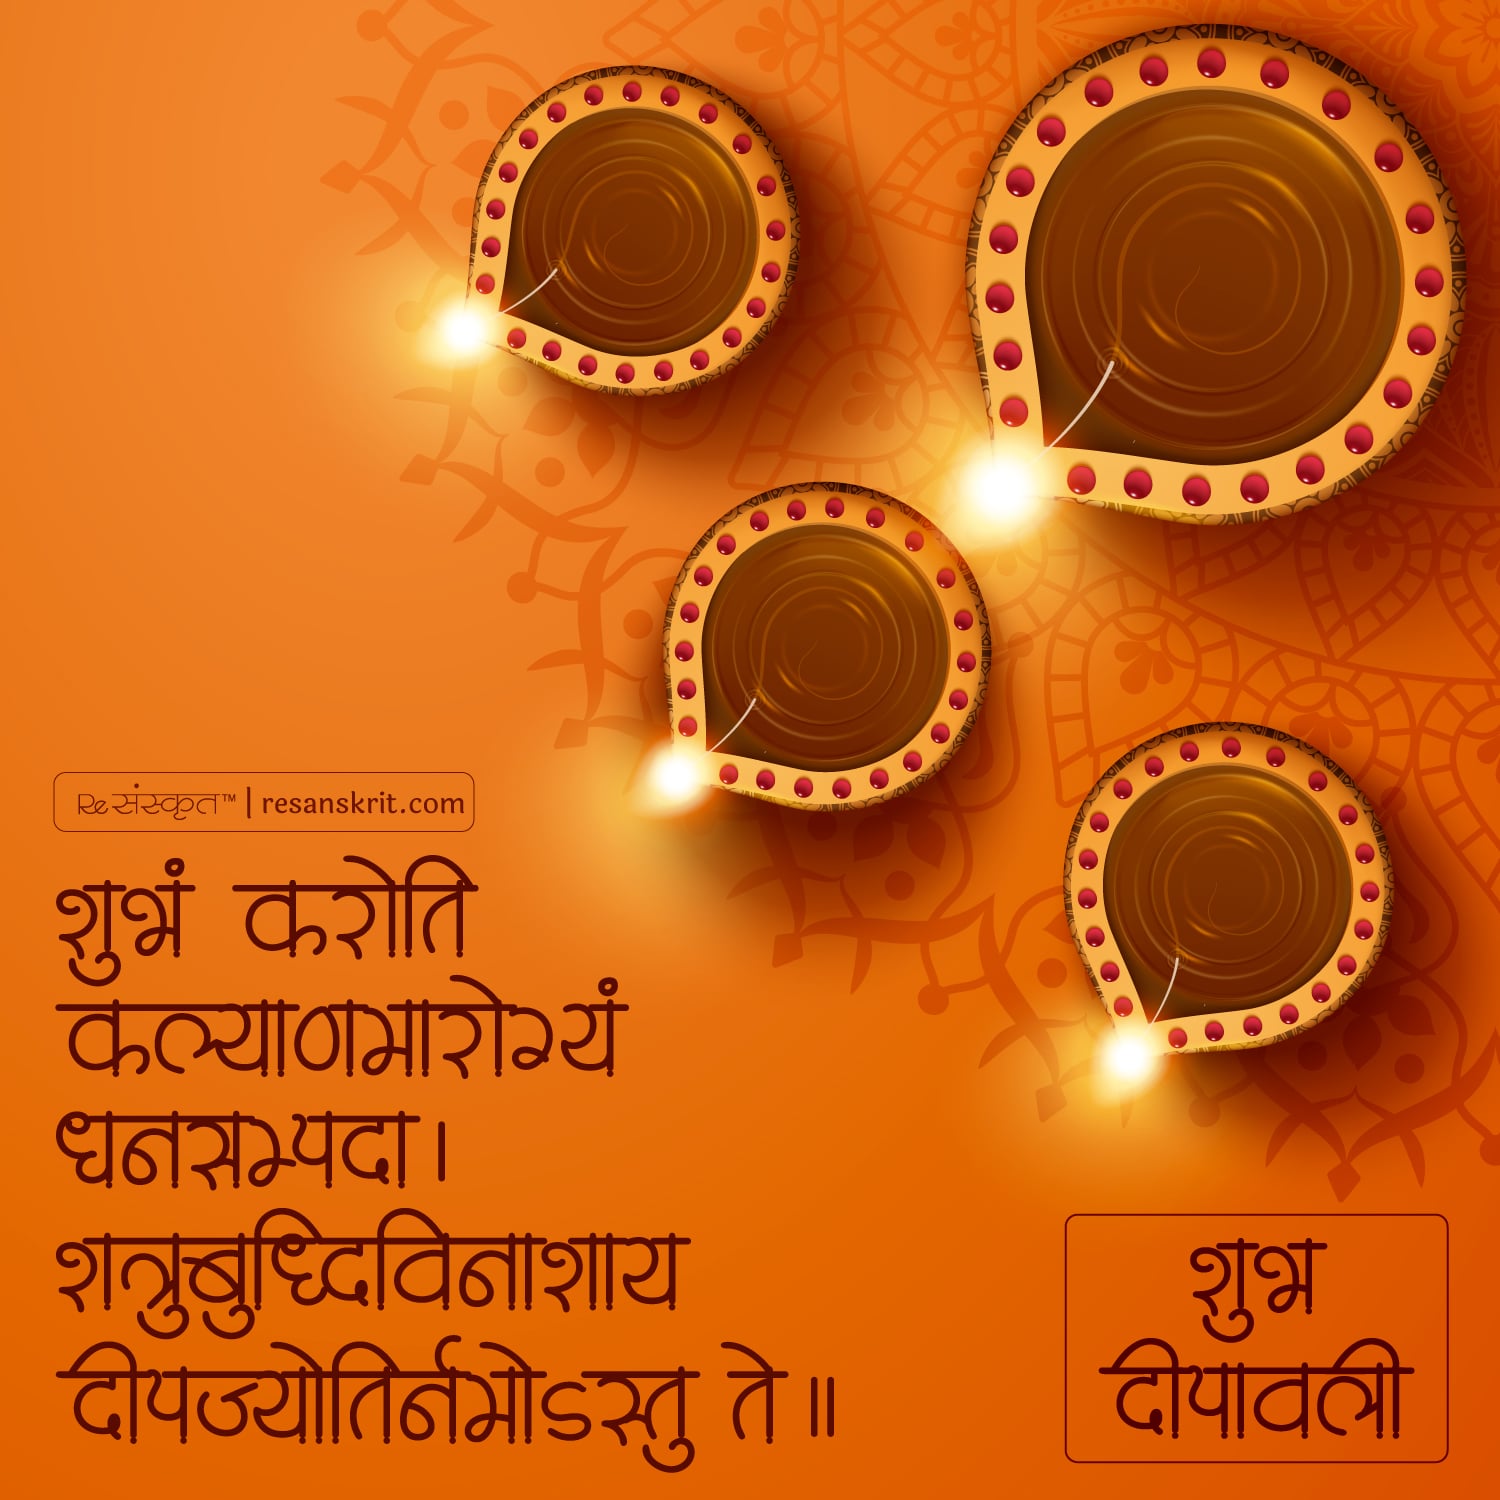 Sanskrit Diwali Image